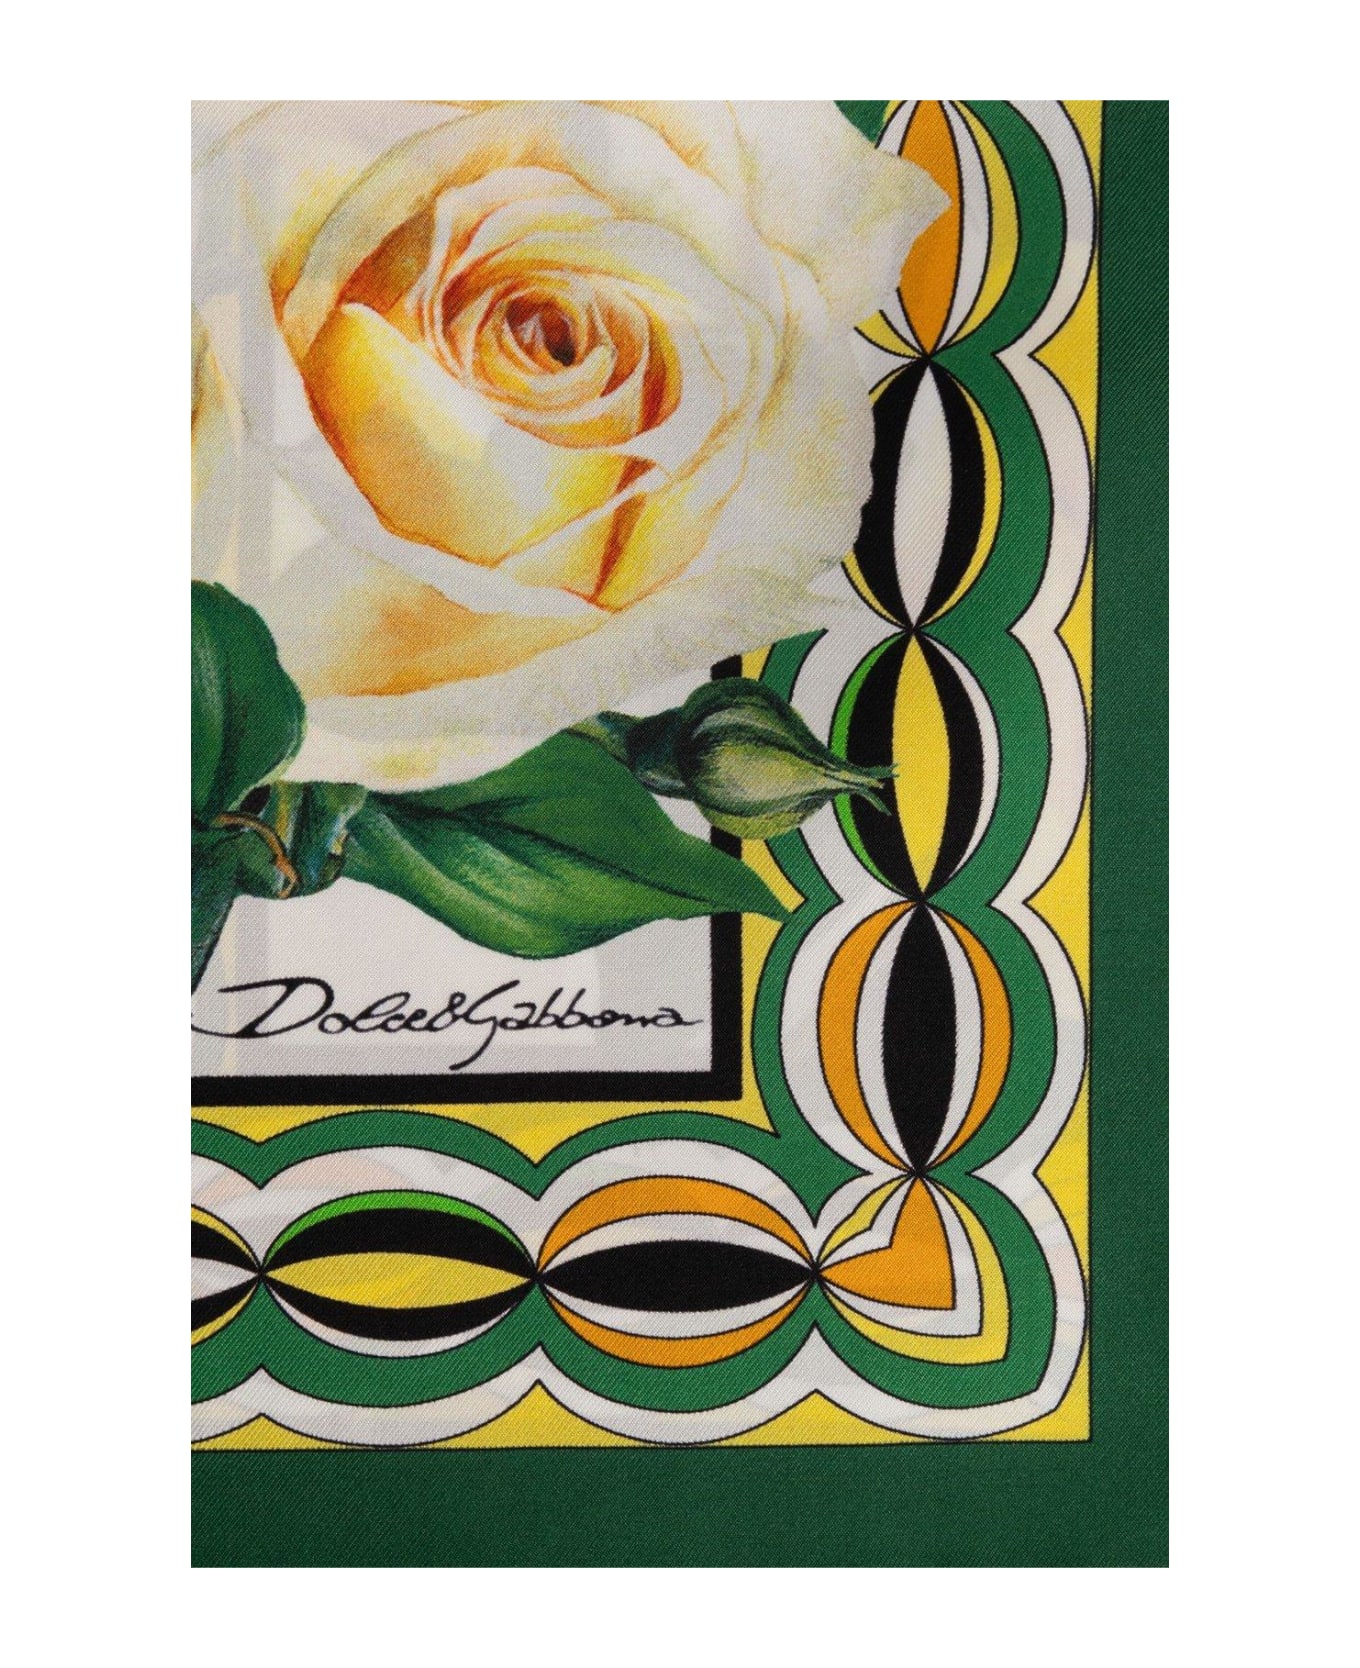 Dolce & Gabbana Rose Printed Twill Scarf - Giallo